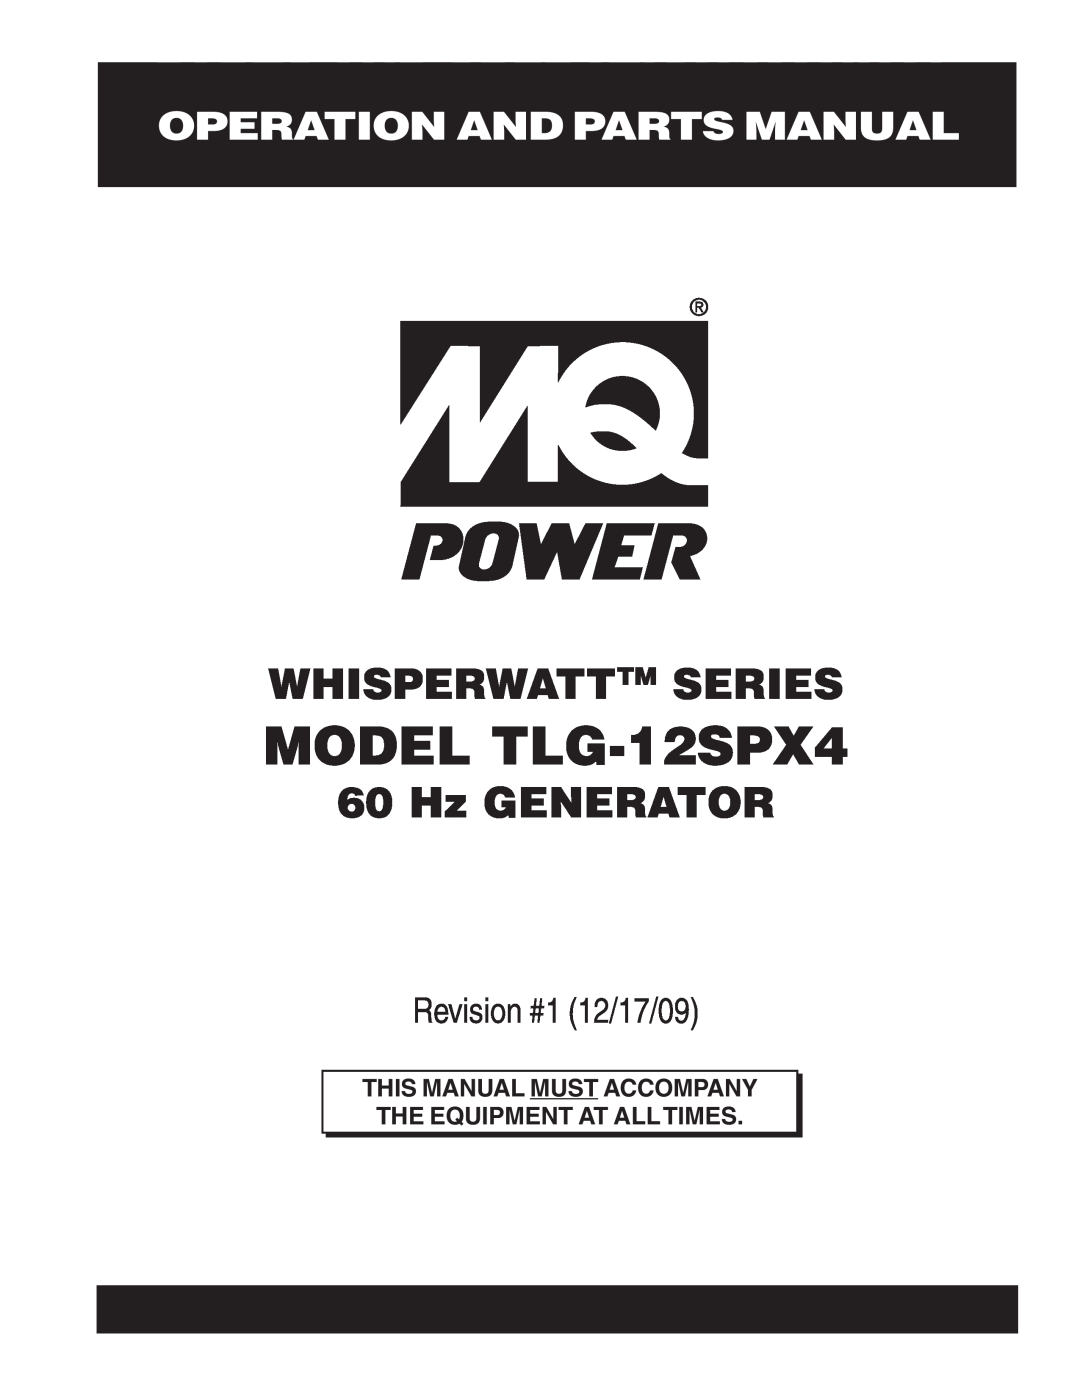 Multiquip operation manual Operation And Parts Manual, MODEL TLG-12SPX4, Whisperwatttm Series, Hz GENERATOR 